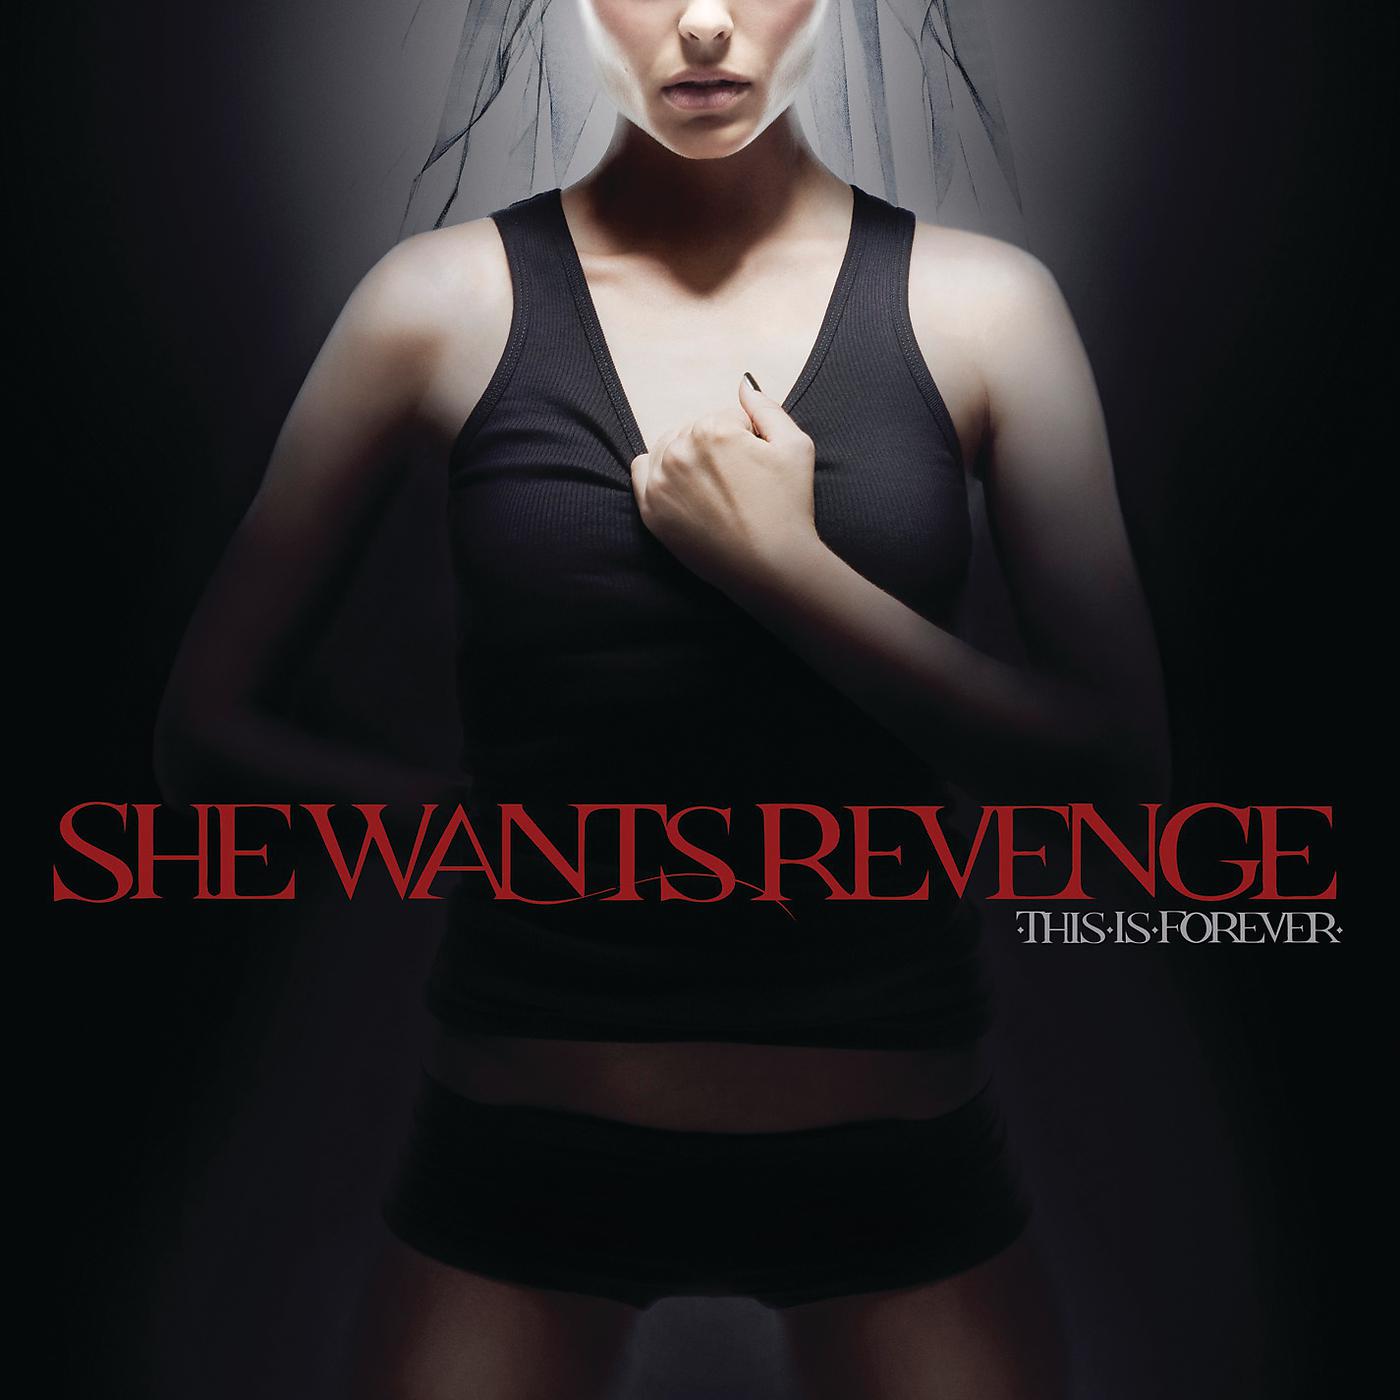 She wants revenge tear you. She wants Revenge. She wants Revenge album. She wants Revenge this is Forever. Альбом обложка she wants Revenge.